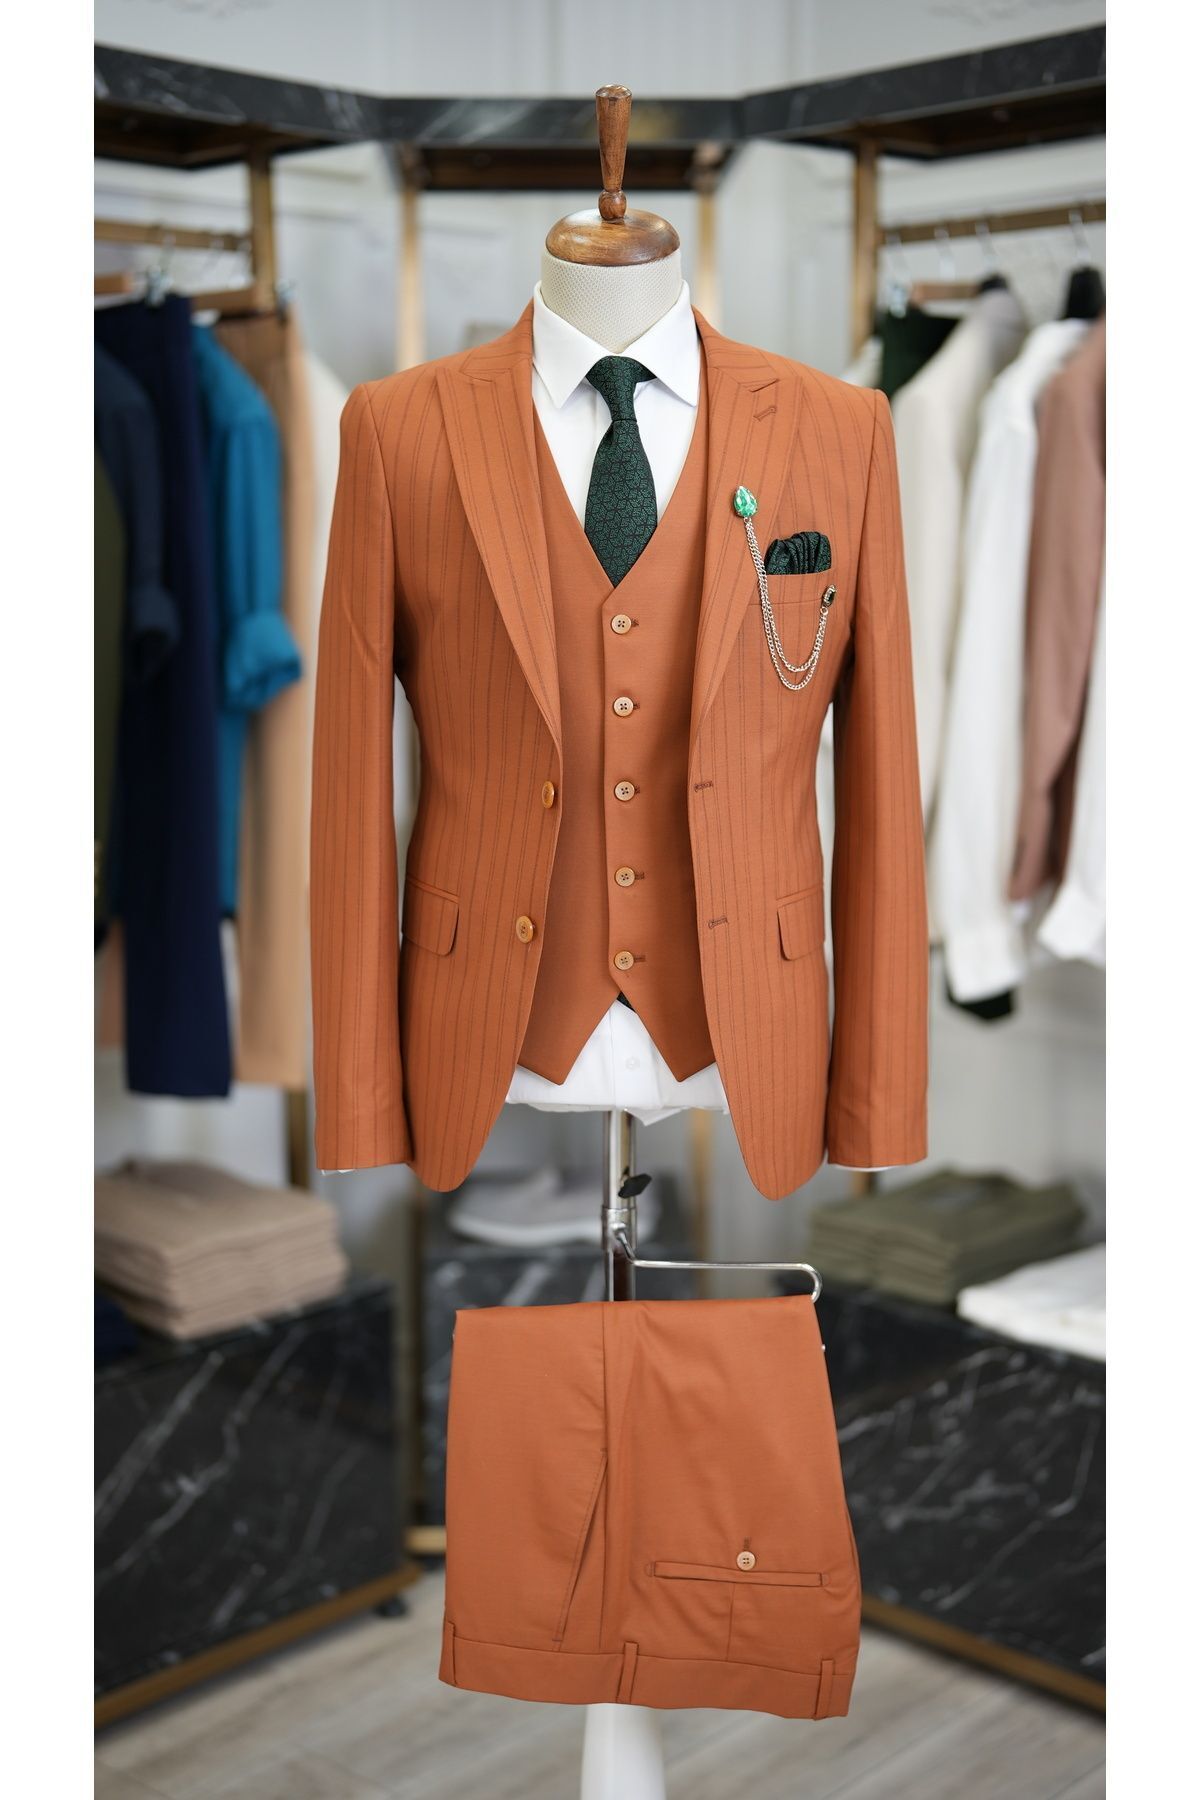 LONATOLİA Erkek Kremit Takım Elbise Italyan Stil Slim Fit Sivri Yaka Ceket Yelek Pantolon-xprzcom820-20